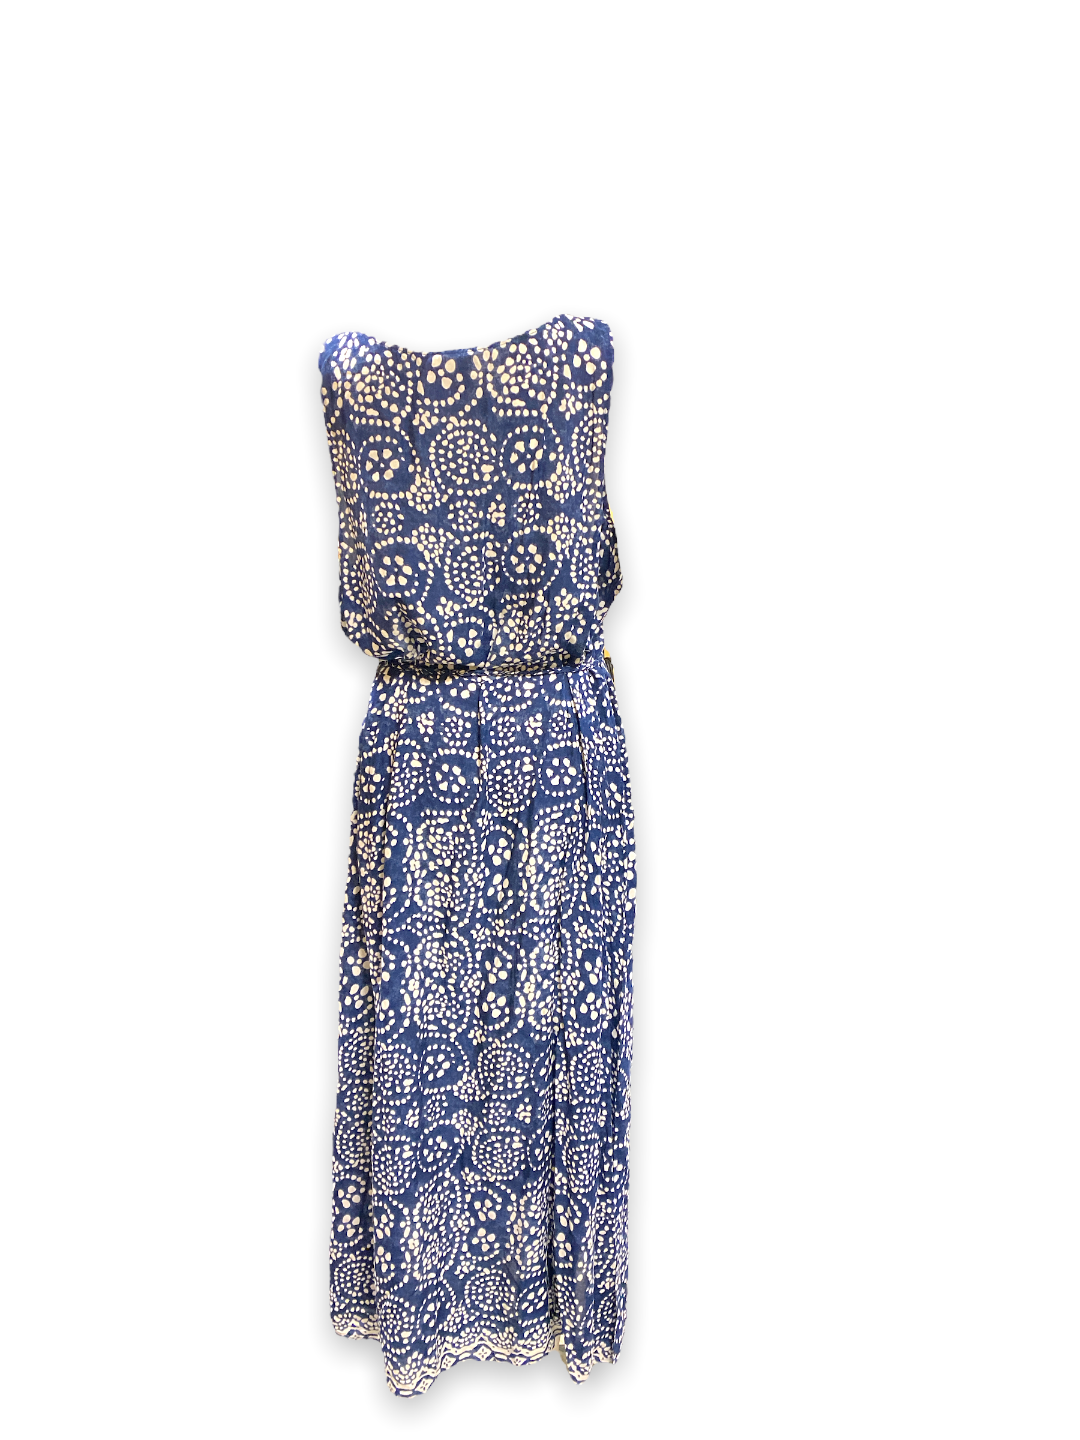 Blue & White Maxi Dress Size: L